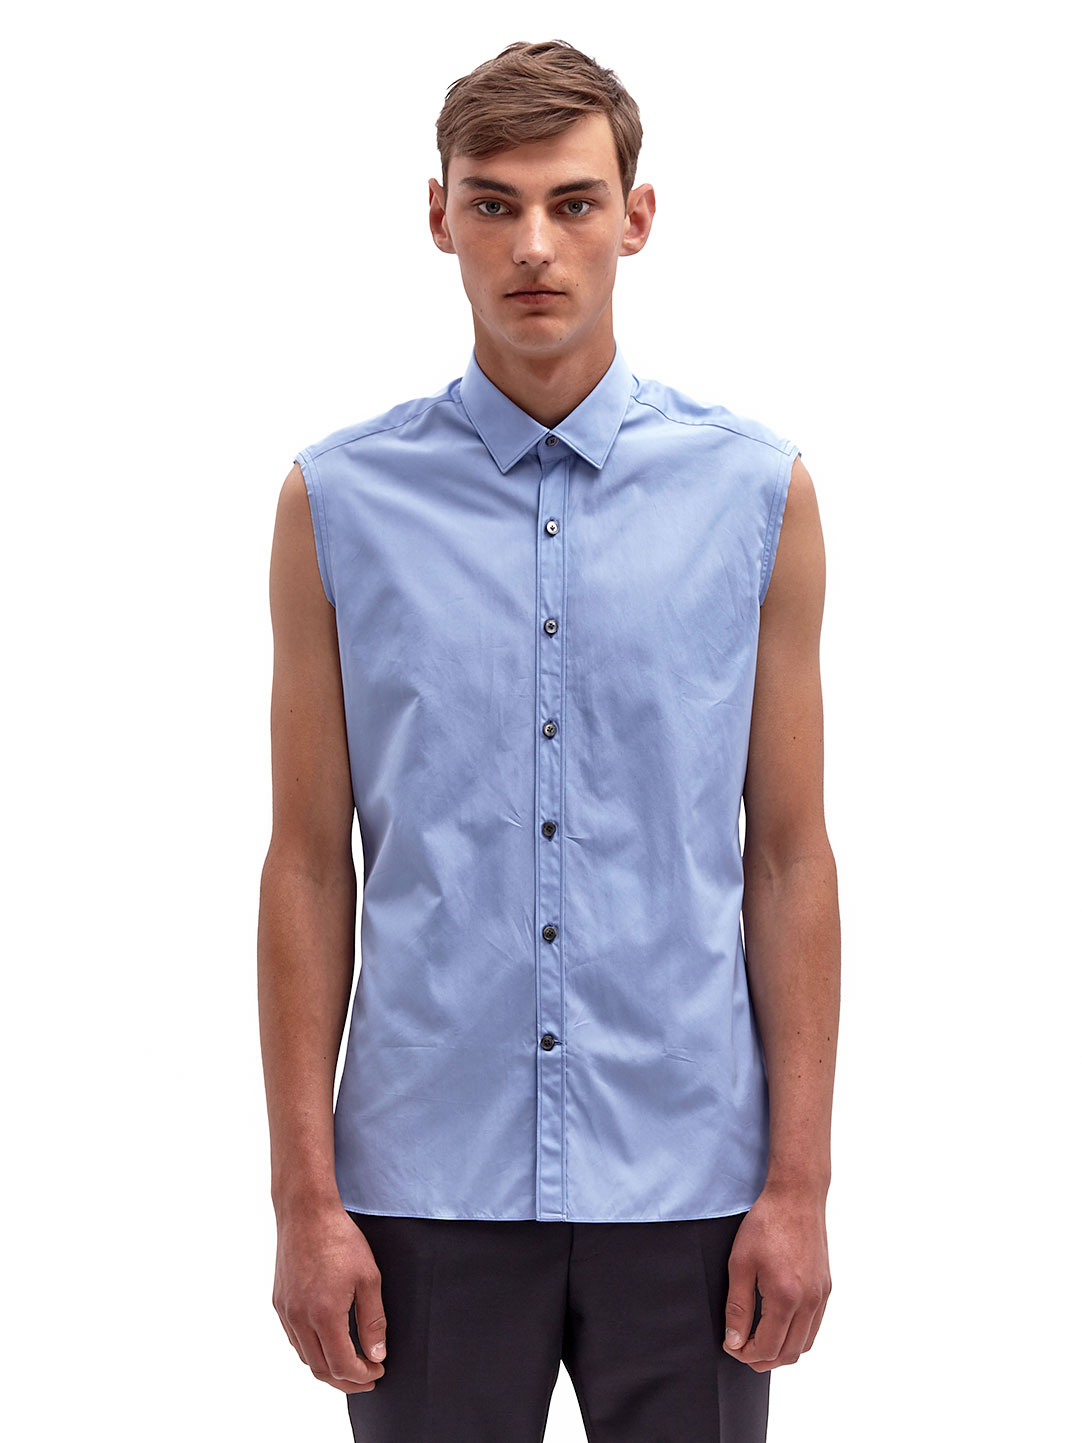 Lanvin Cotton Mens Sleeveless Shirt in Blue for Men - Lyst